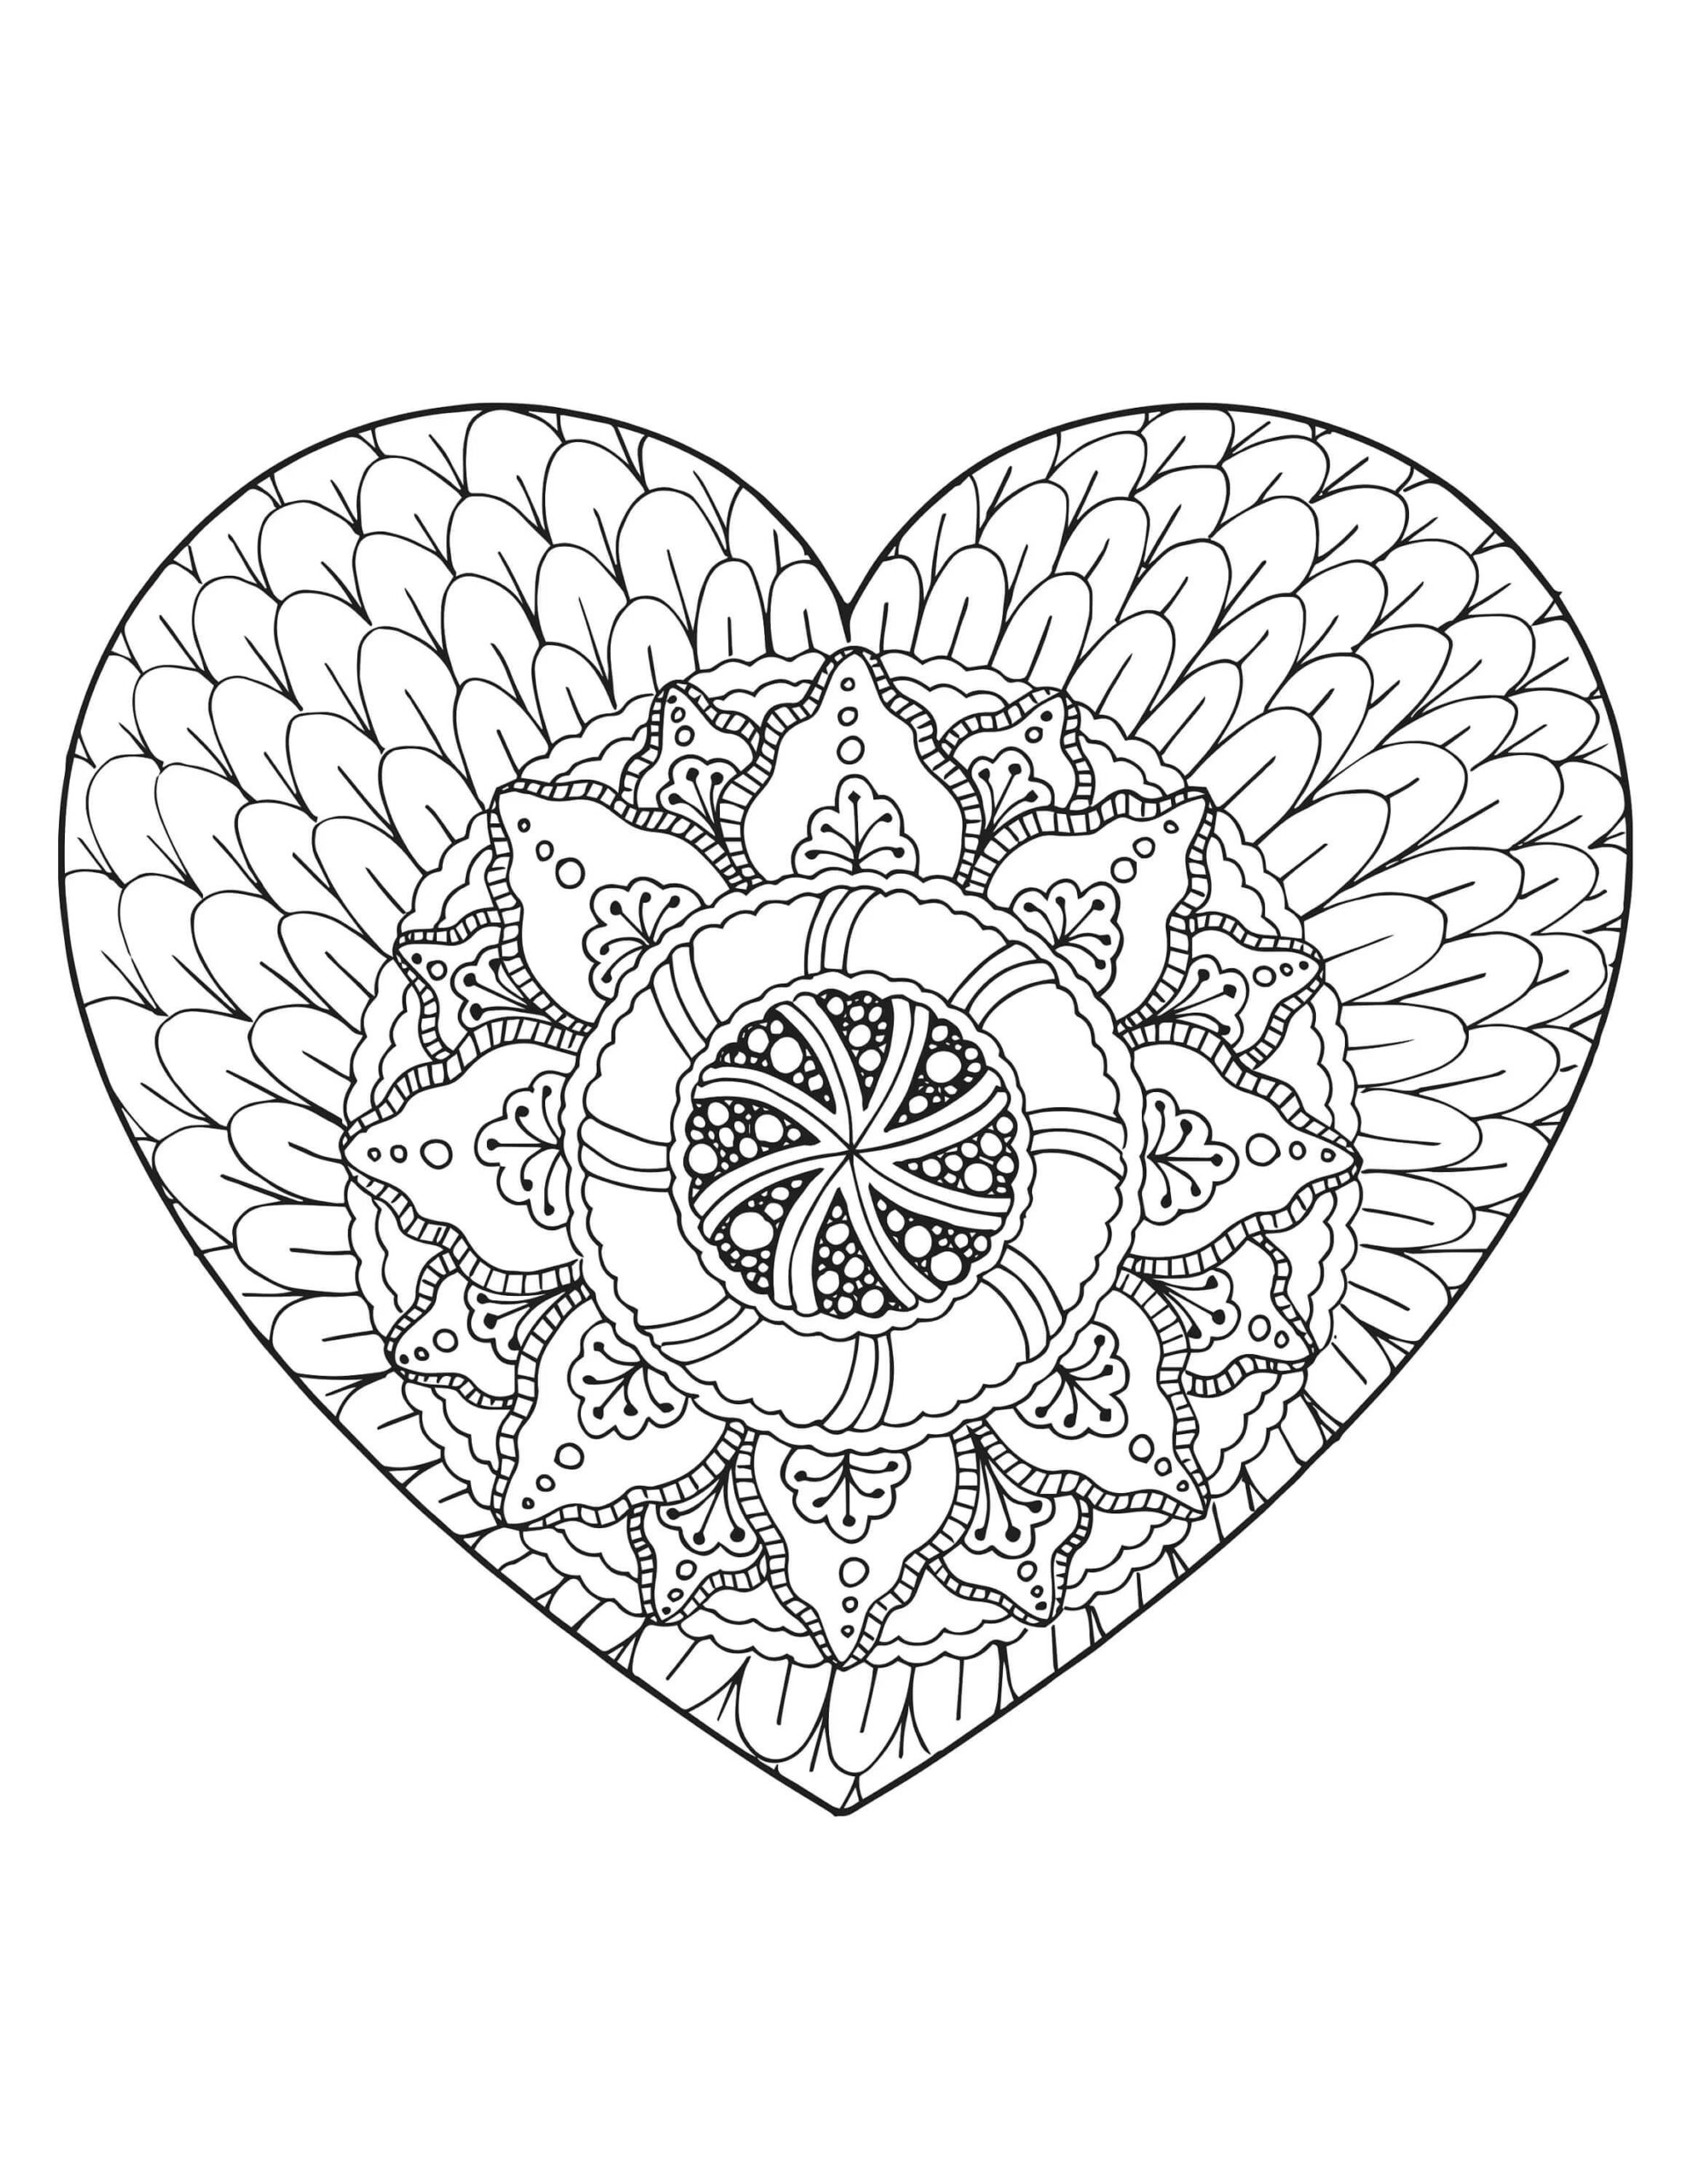 Mandala Heart Coloring Page – Sheet 12 Mandala